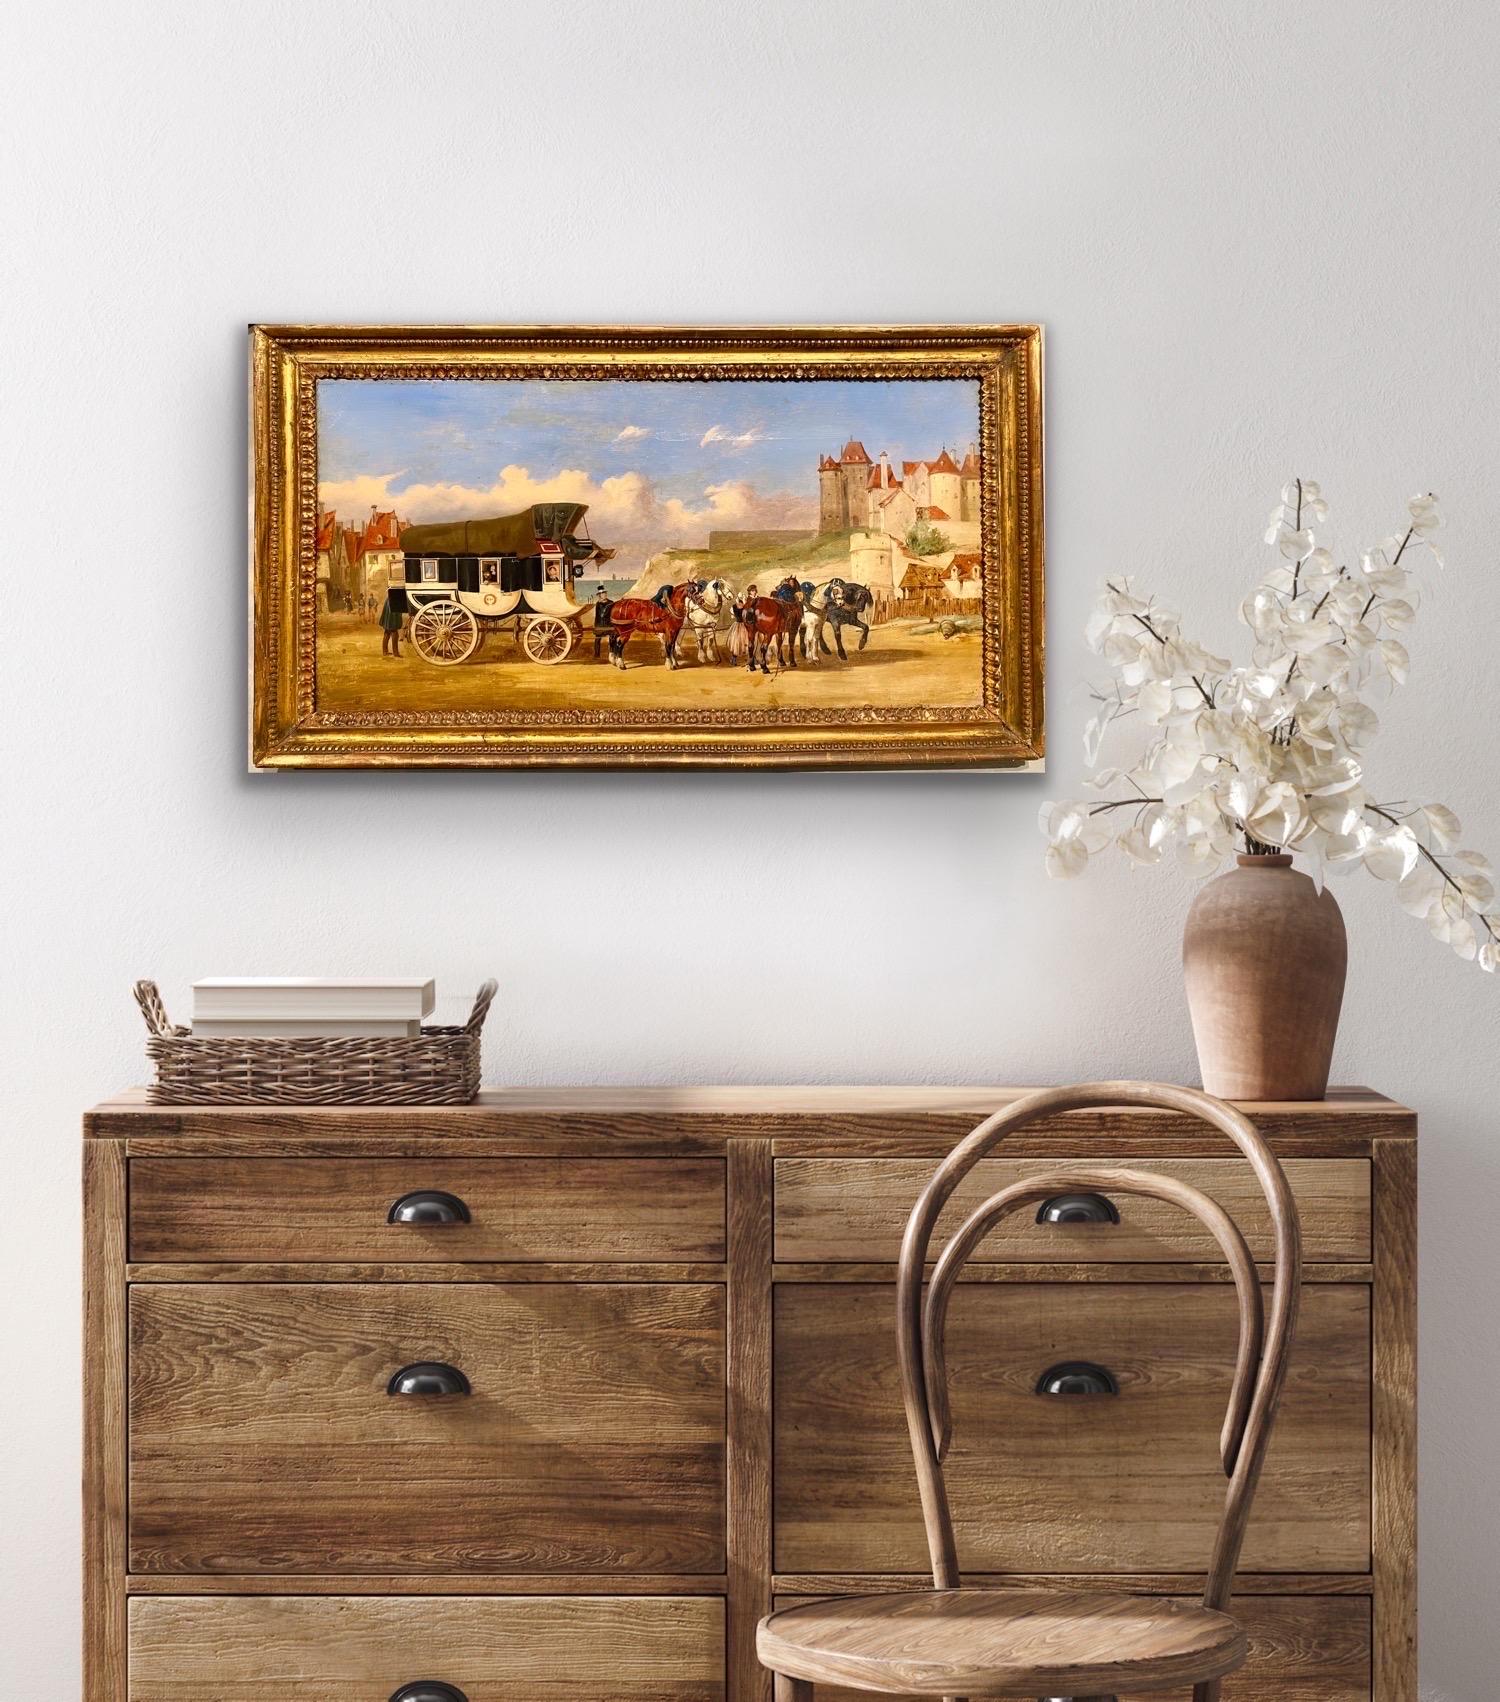 19th century French romantic painting - Le chateau de Dieppe - horse carriage  2